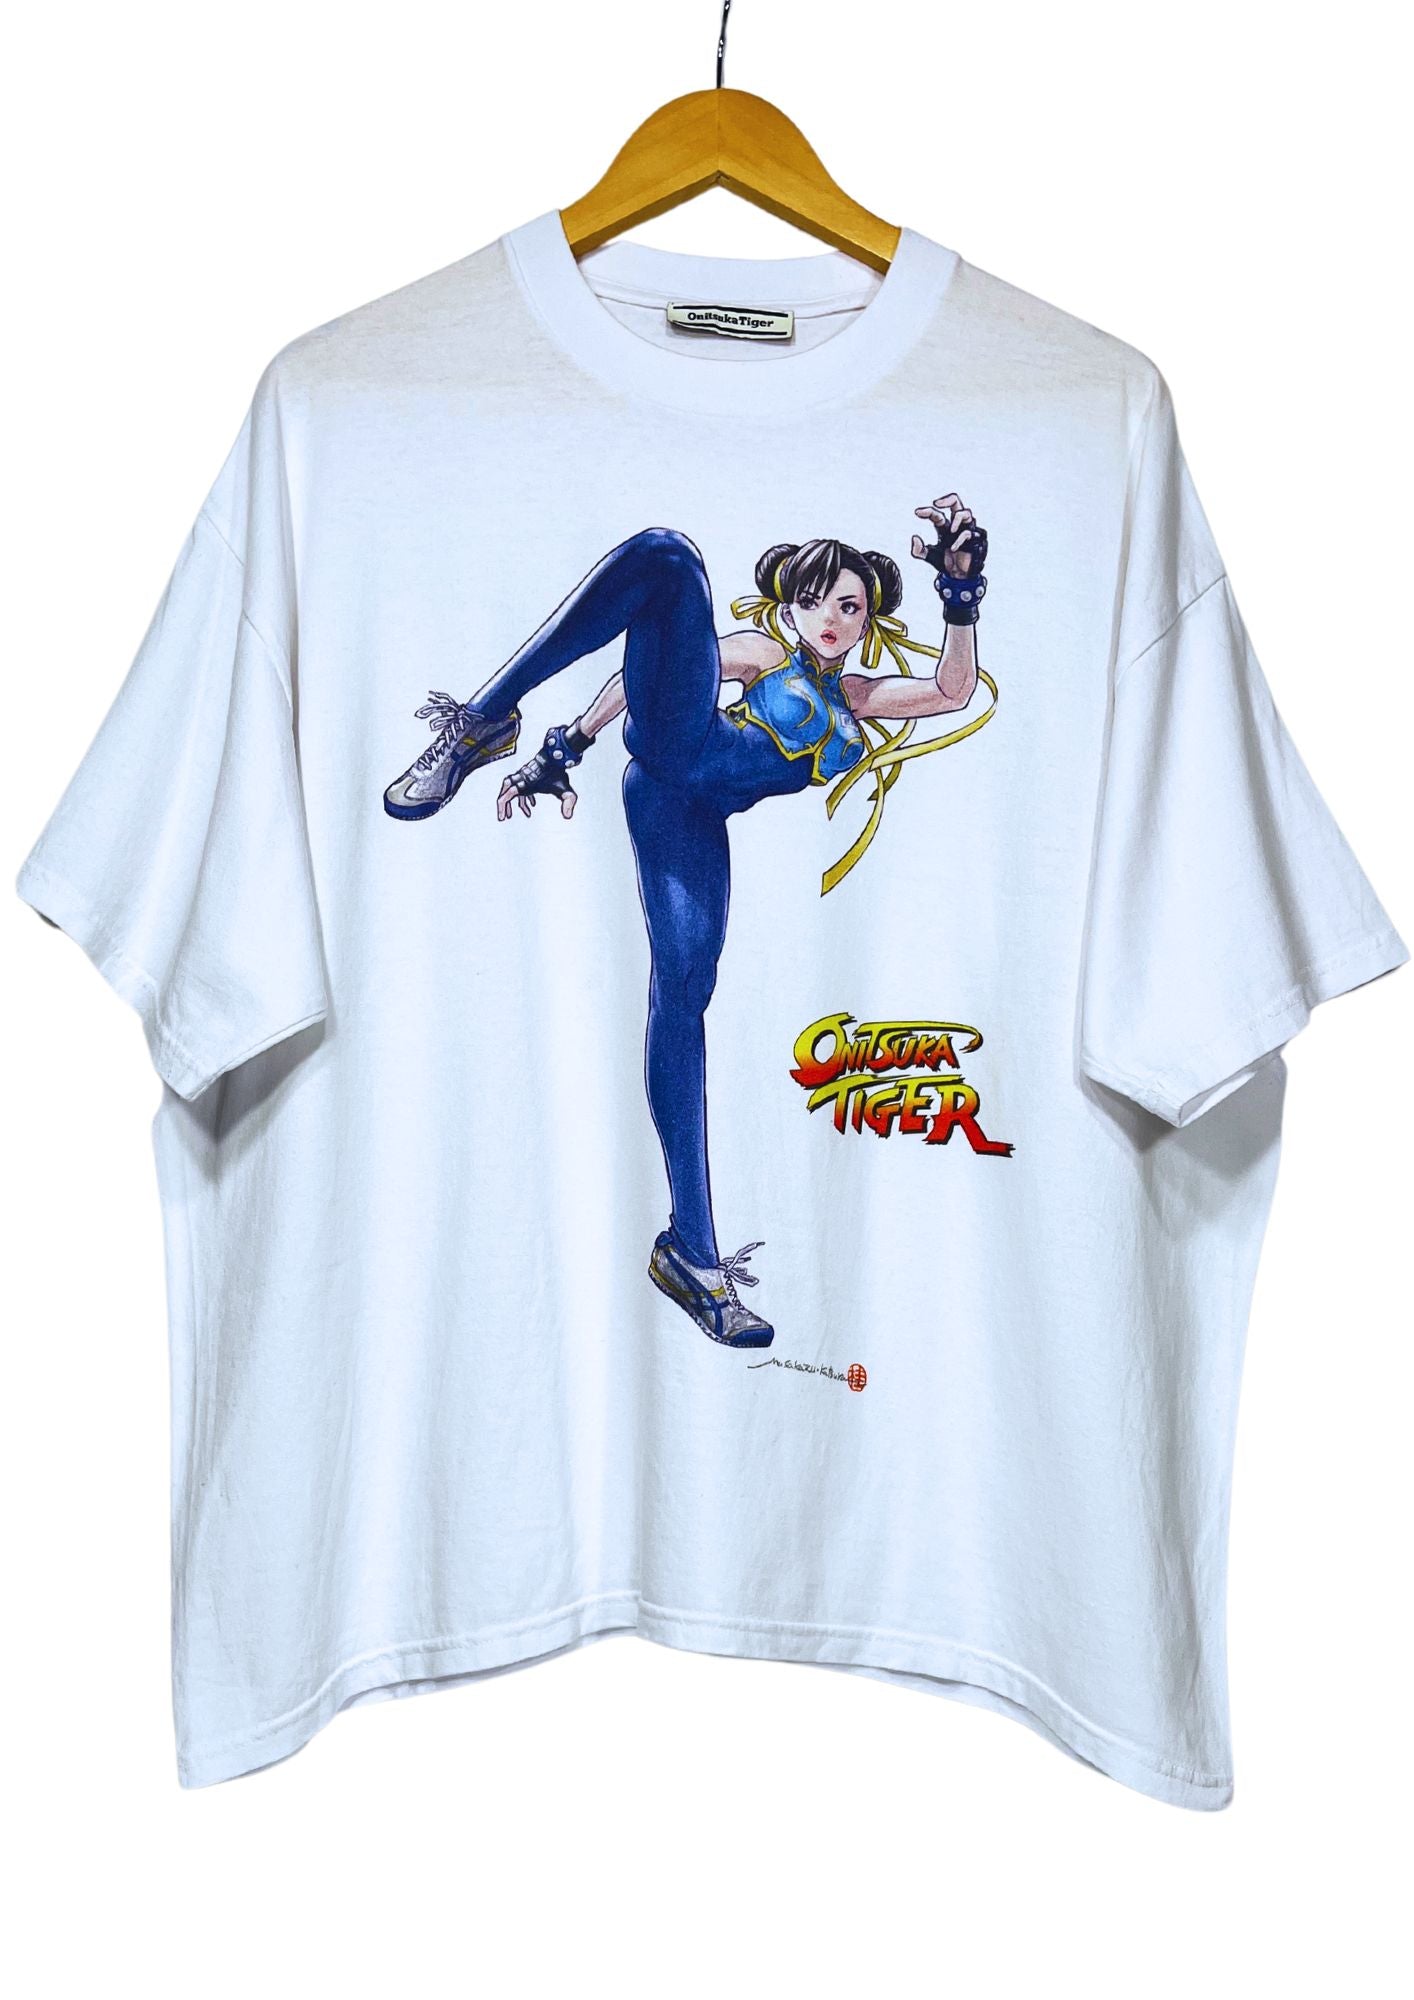 2019 Street Fighter x Onitsuka Tiger Chun Li T-shirt